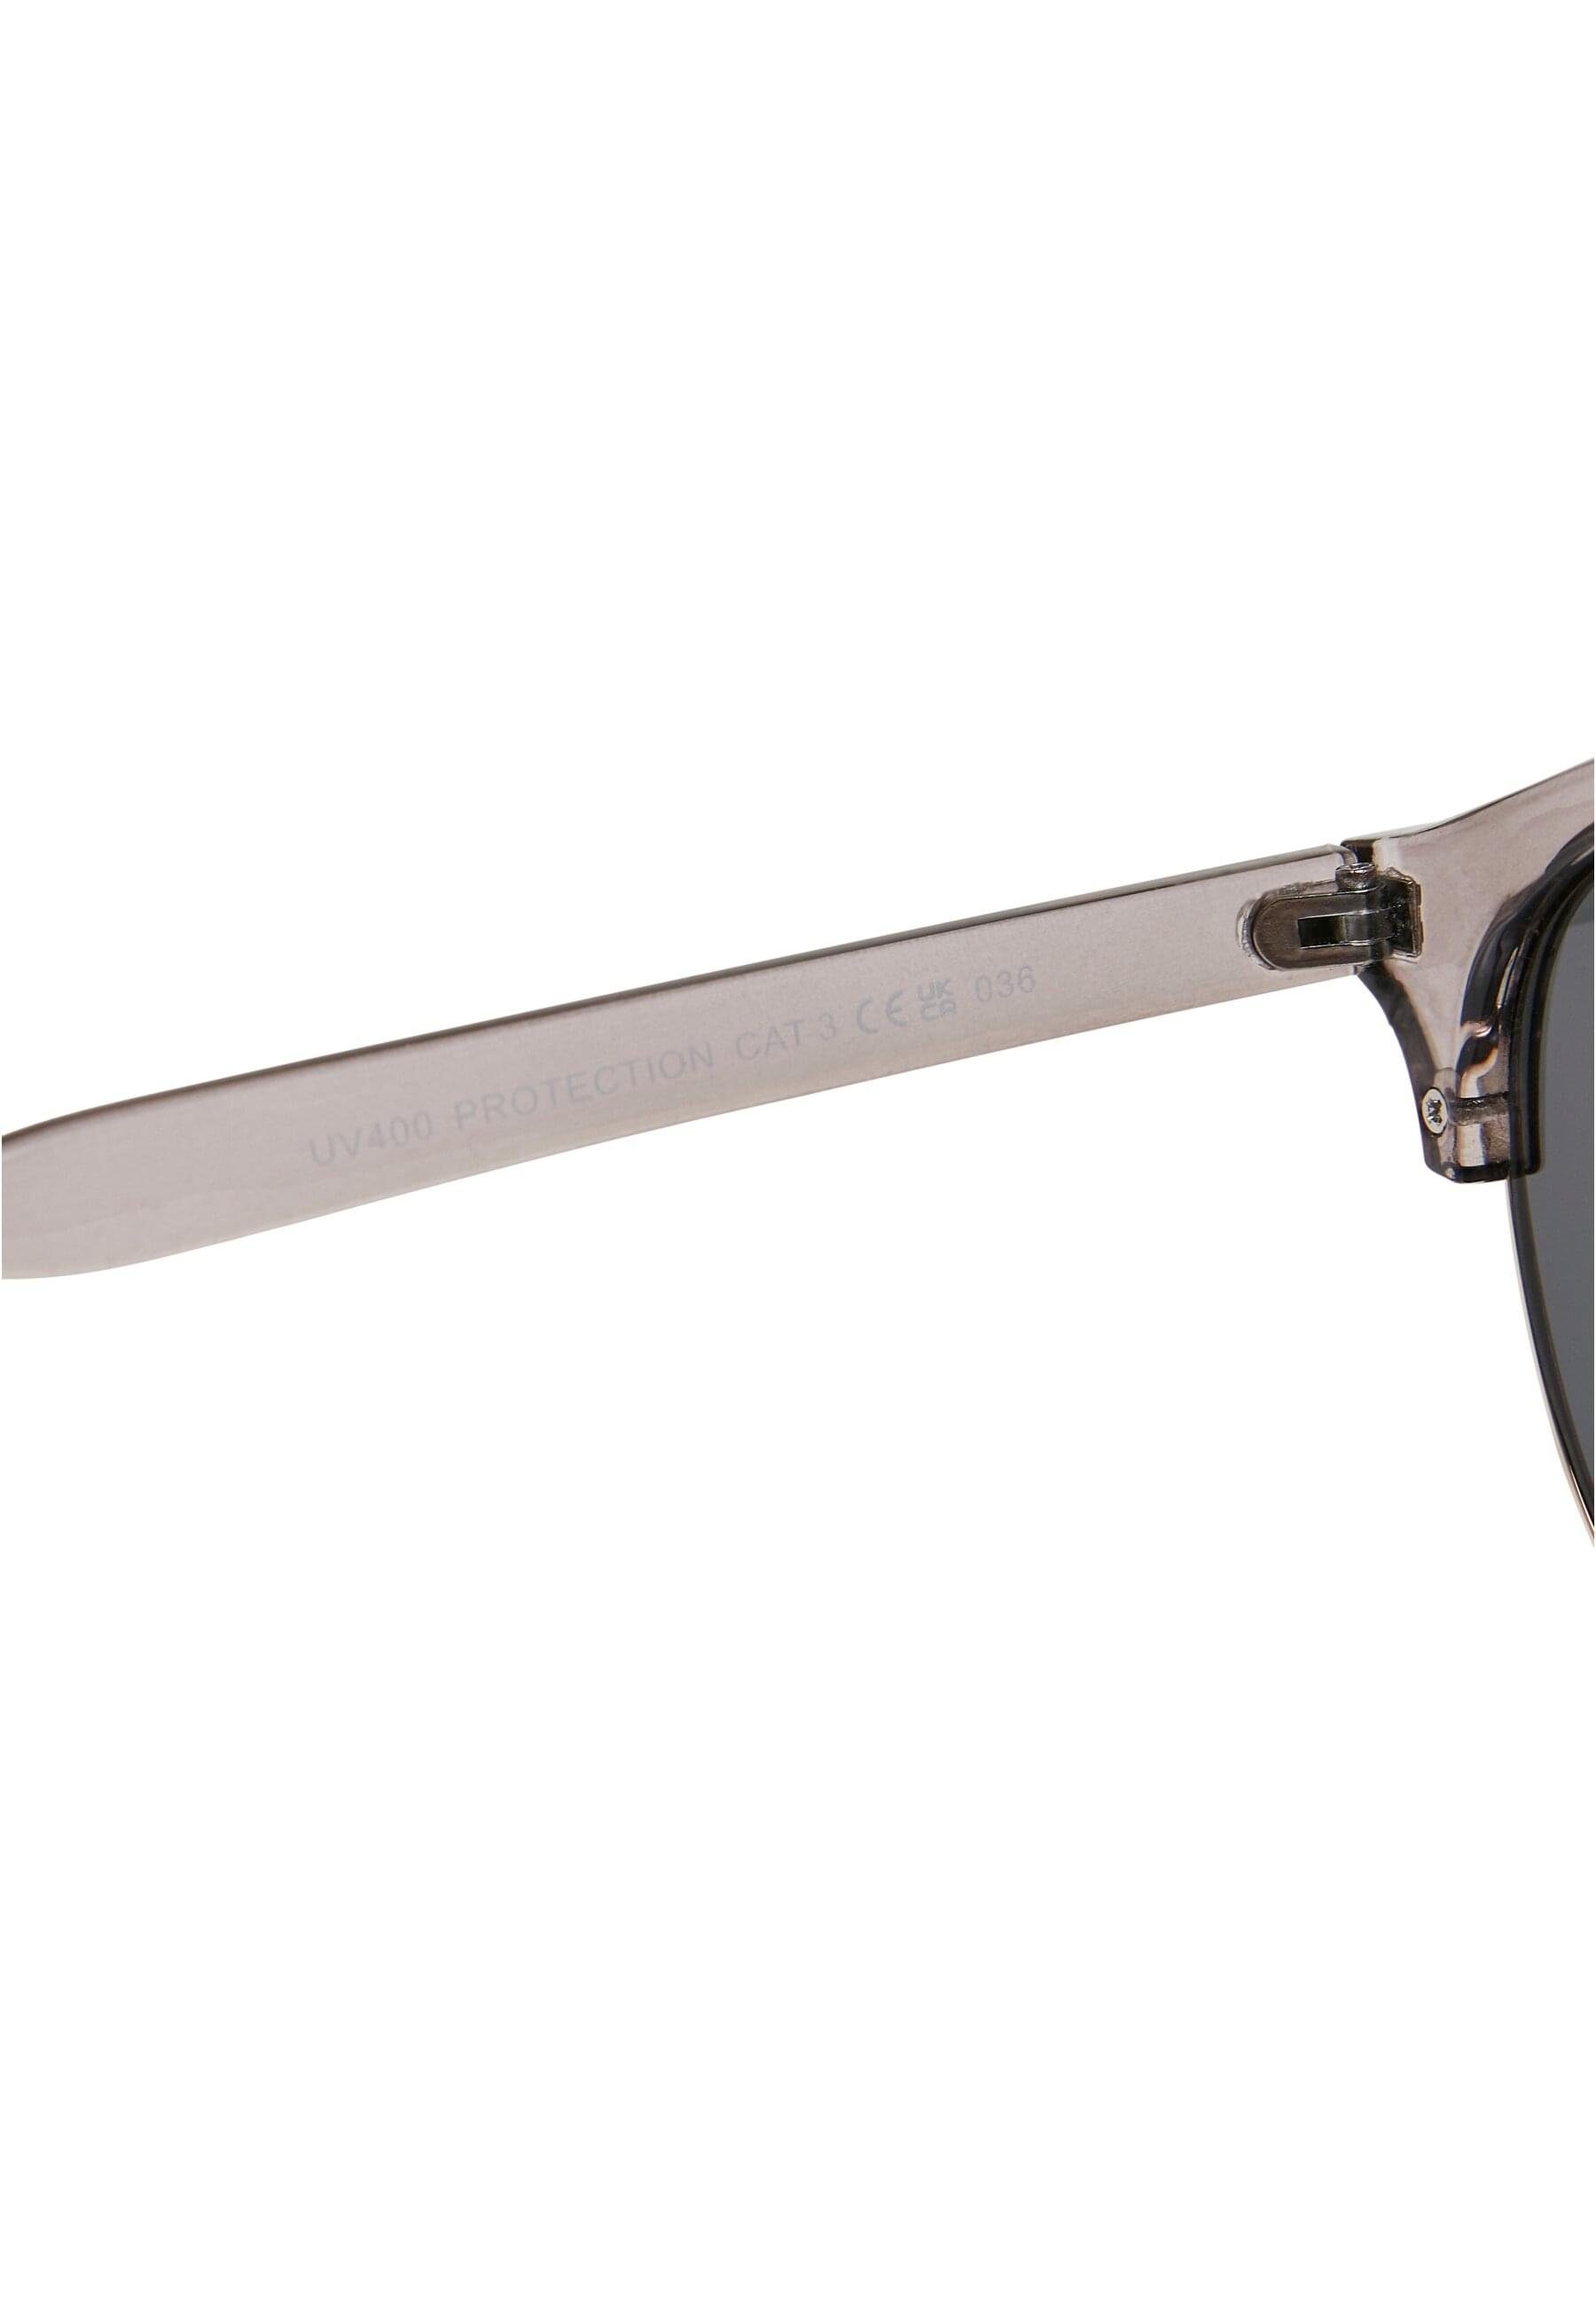 Unisex Bay grey Sonnenbrille Sunglasses Coral CLASSICS URBAN